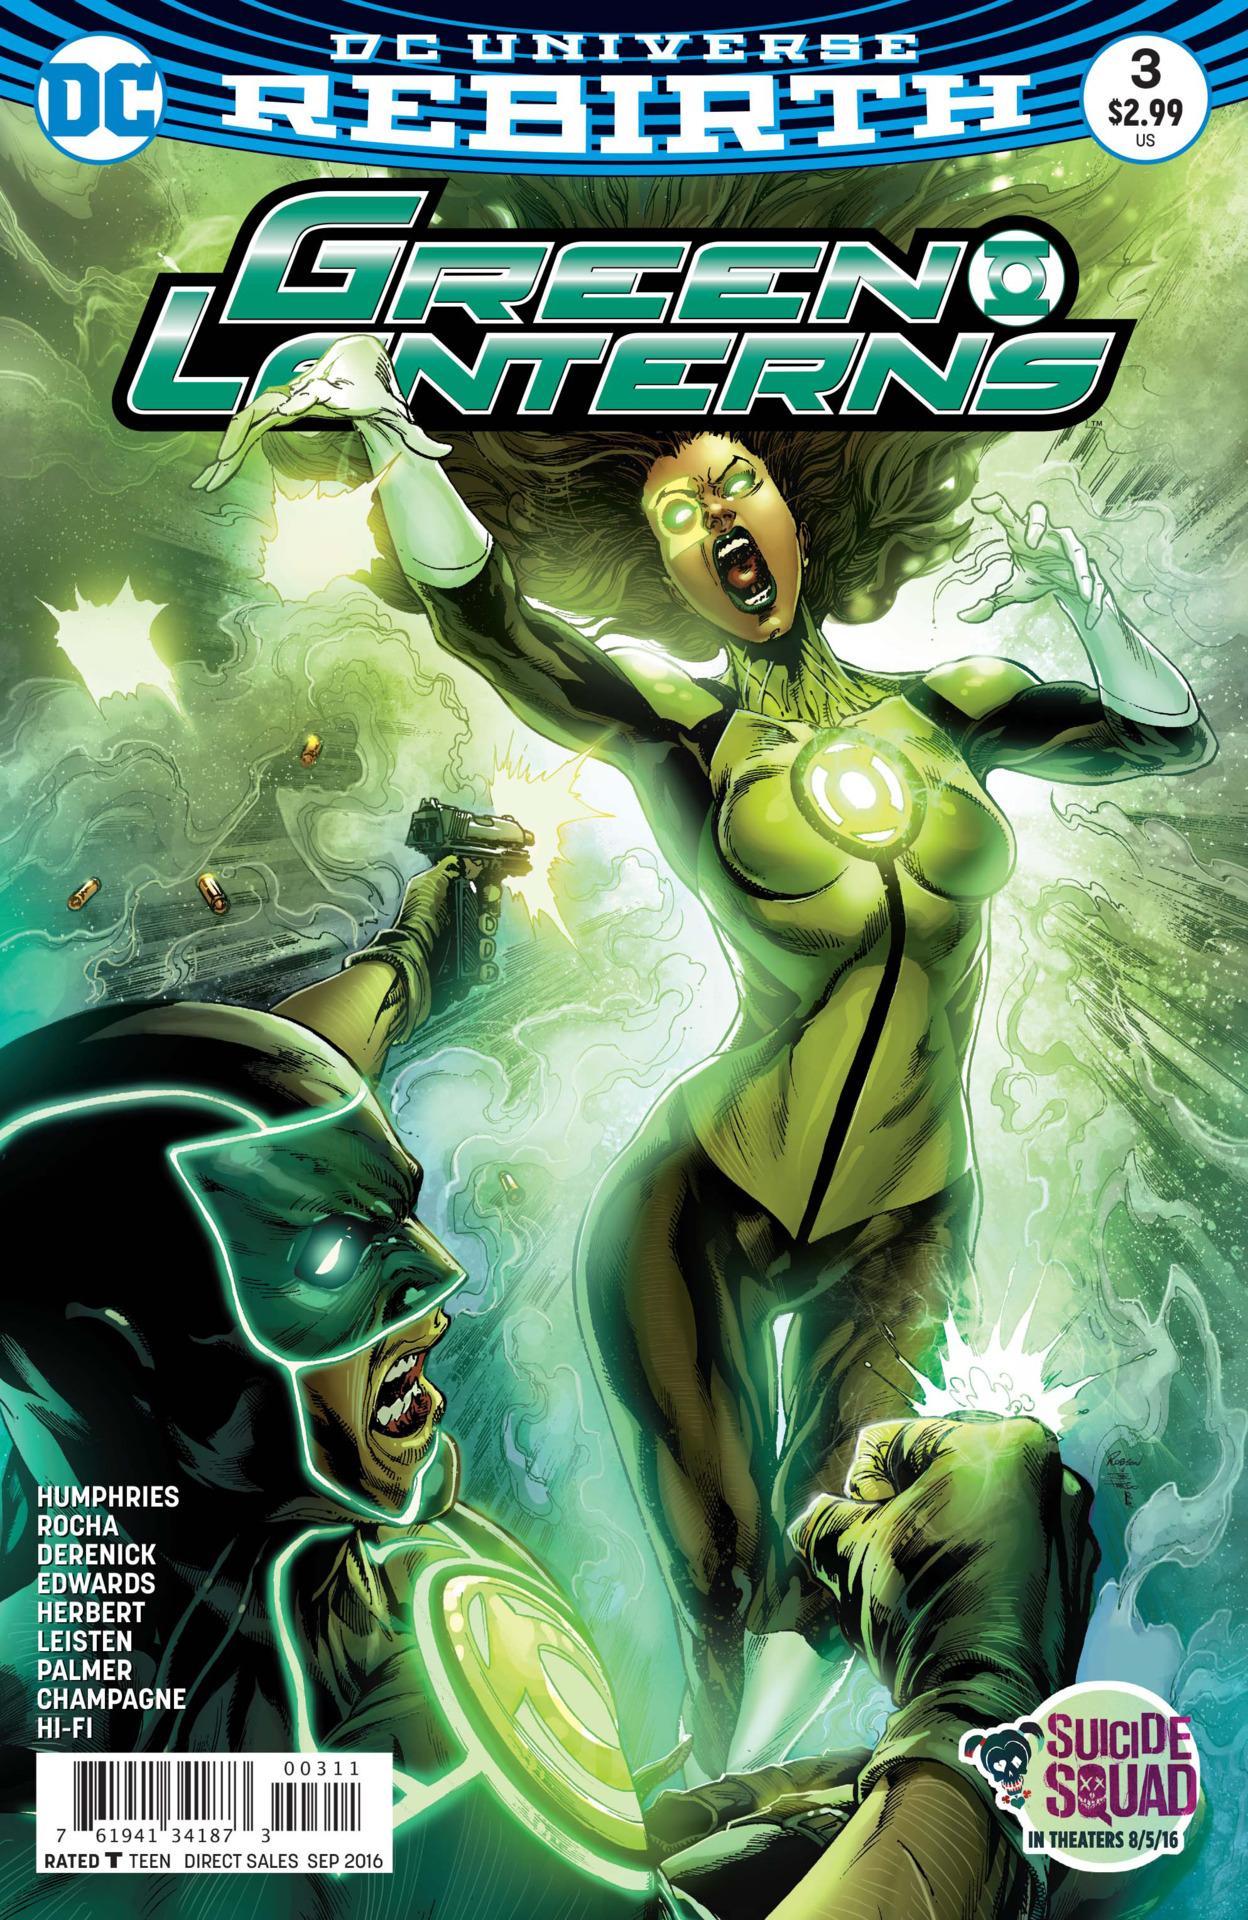 Green Lanterns Vol. 1 #3